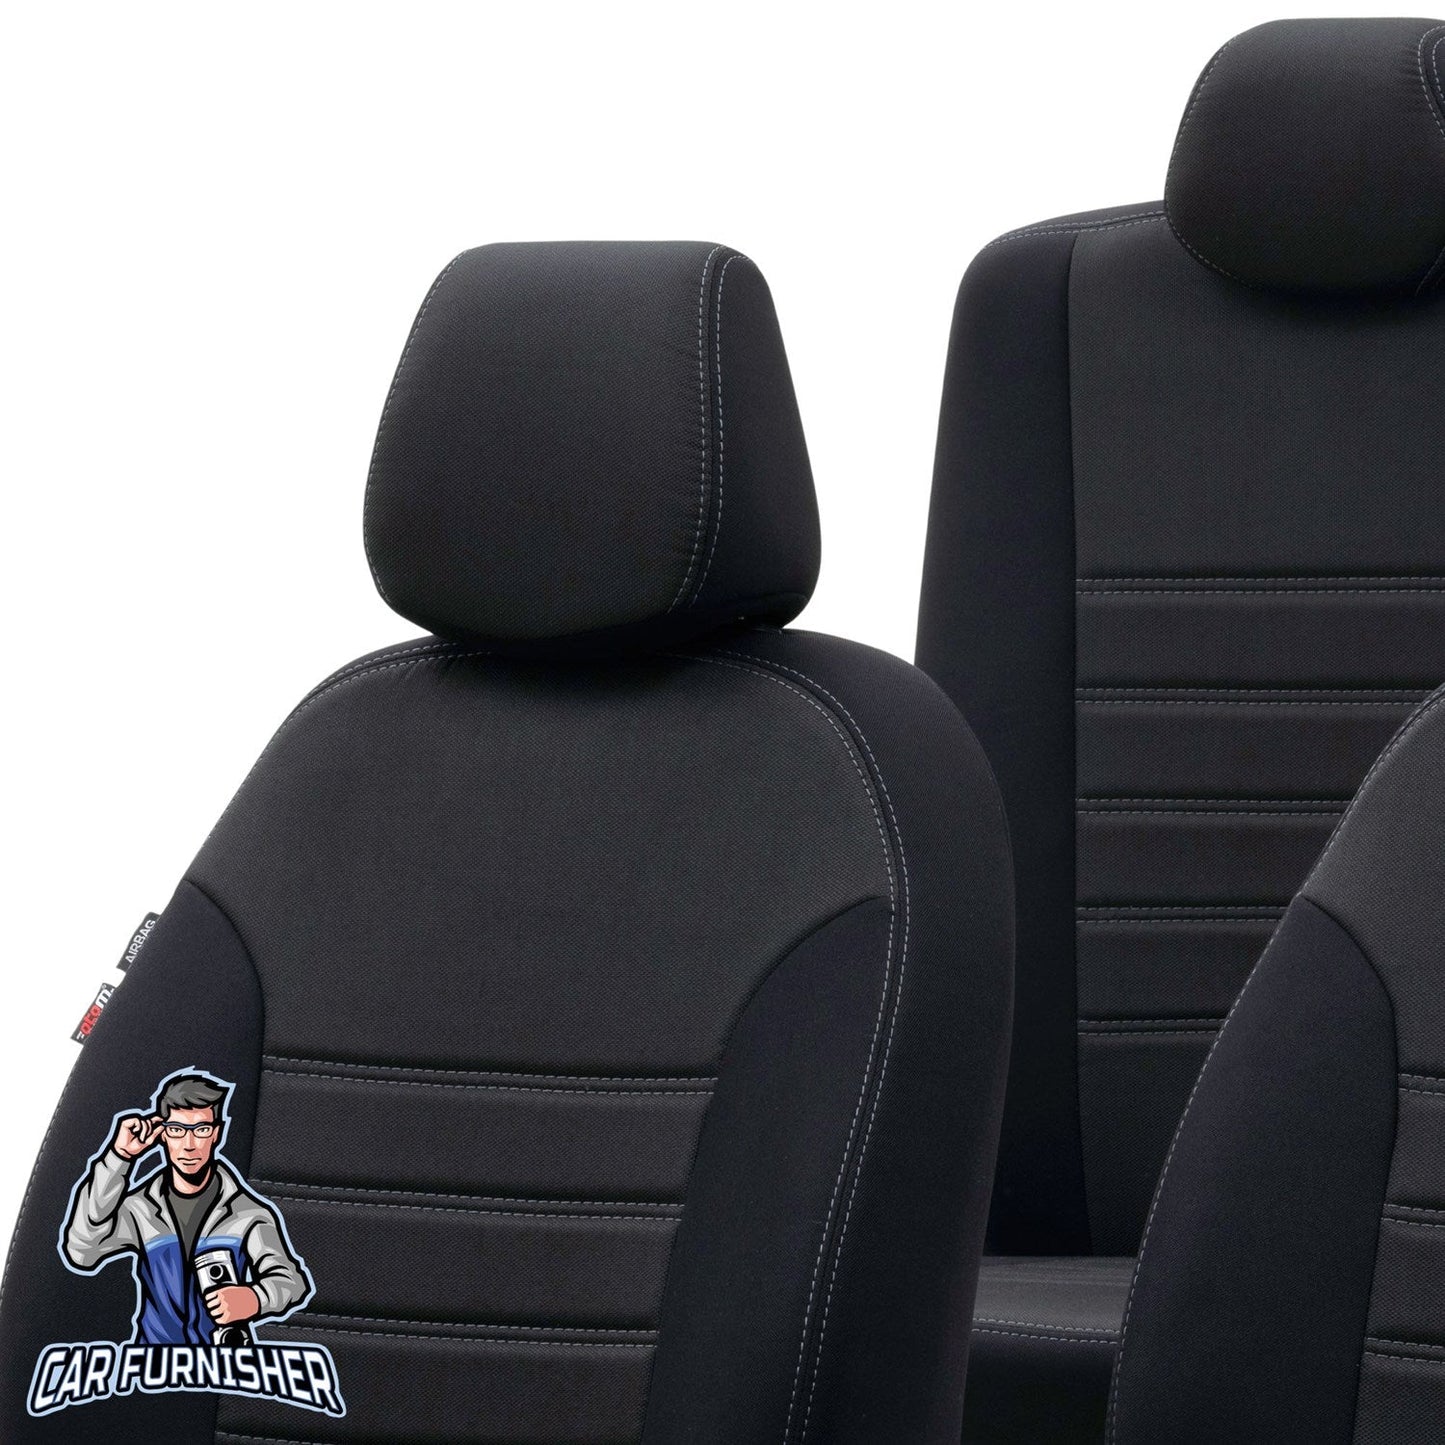 Toyota Aygo Seat Cover Original Jacquard Design Dark Beige Jacquard Fabric